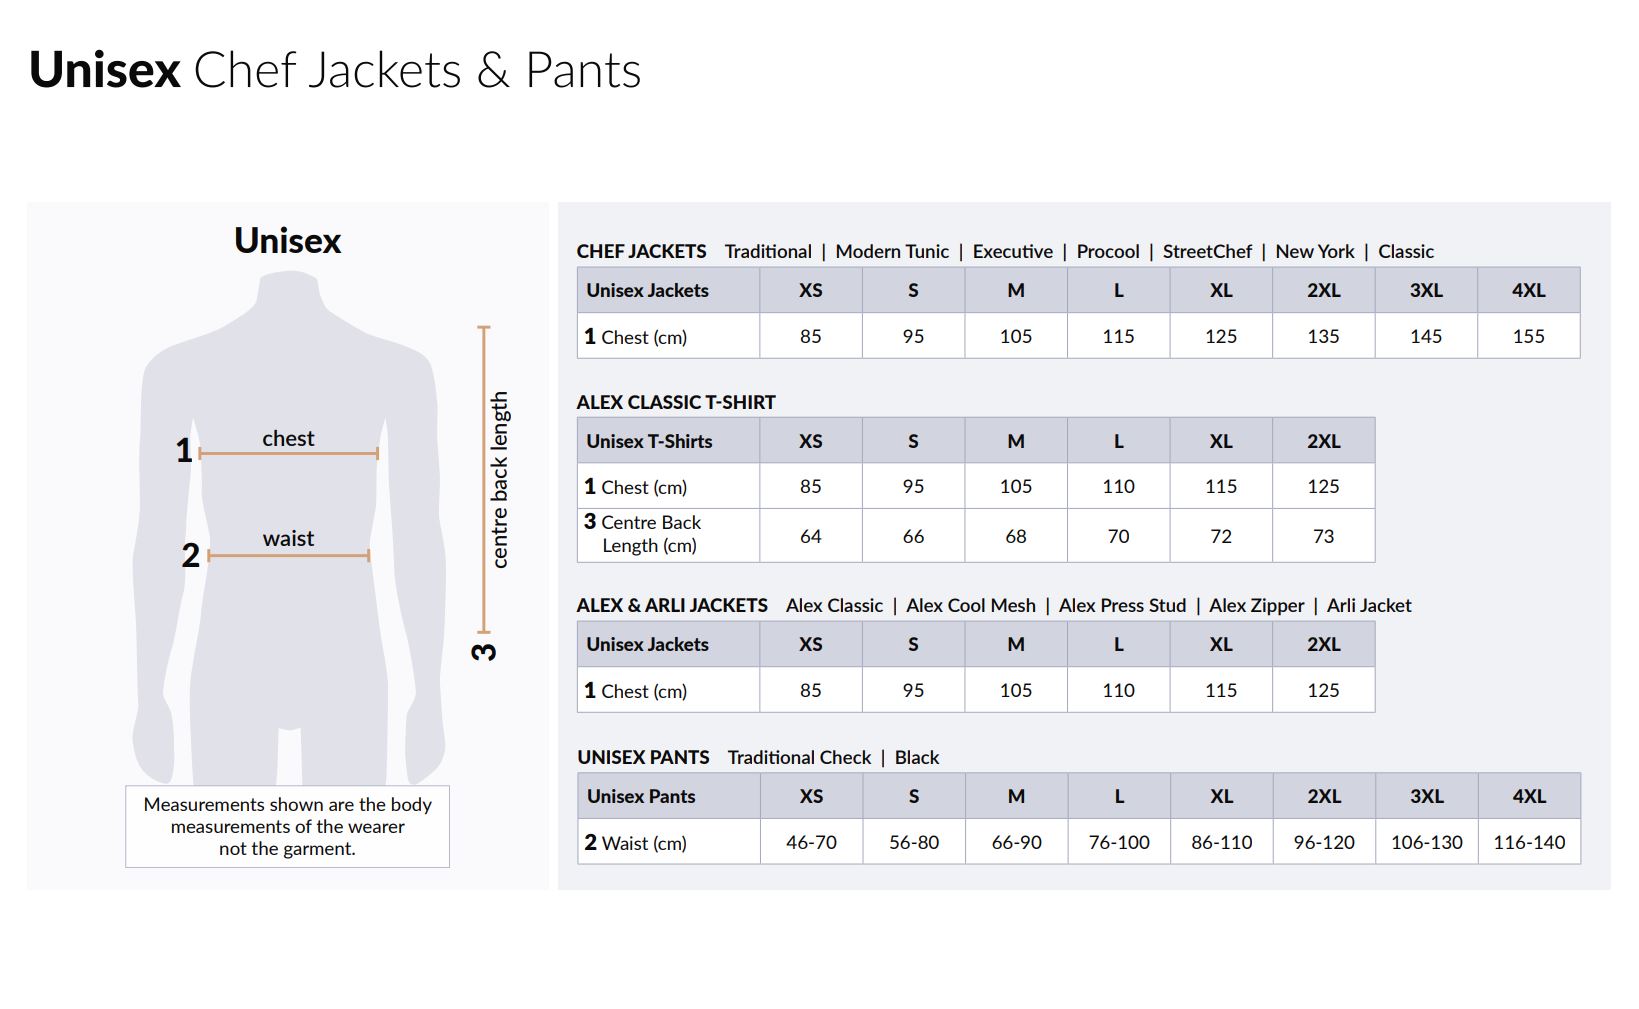 Alex Zipper Jacket White | Perfect Unisex Jacket